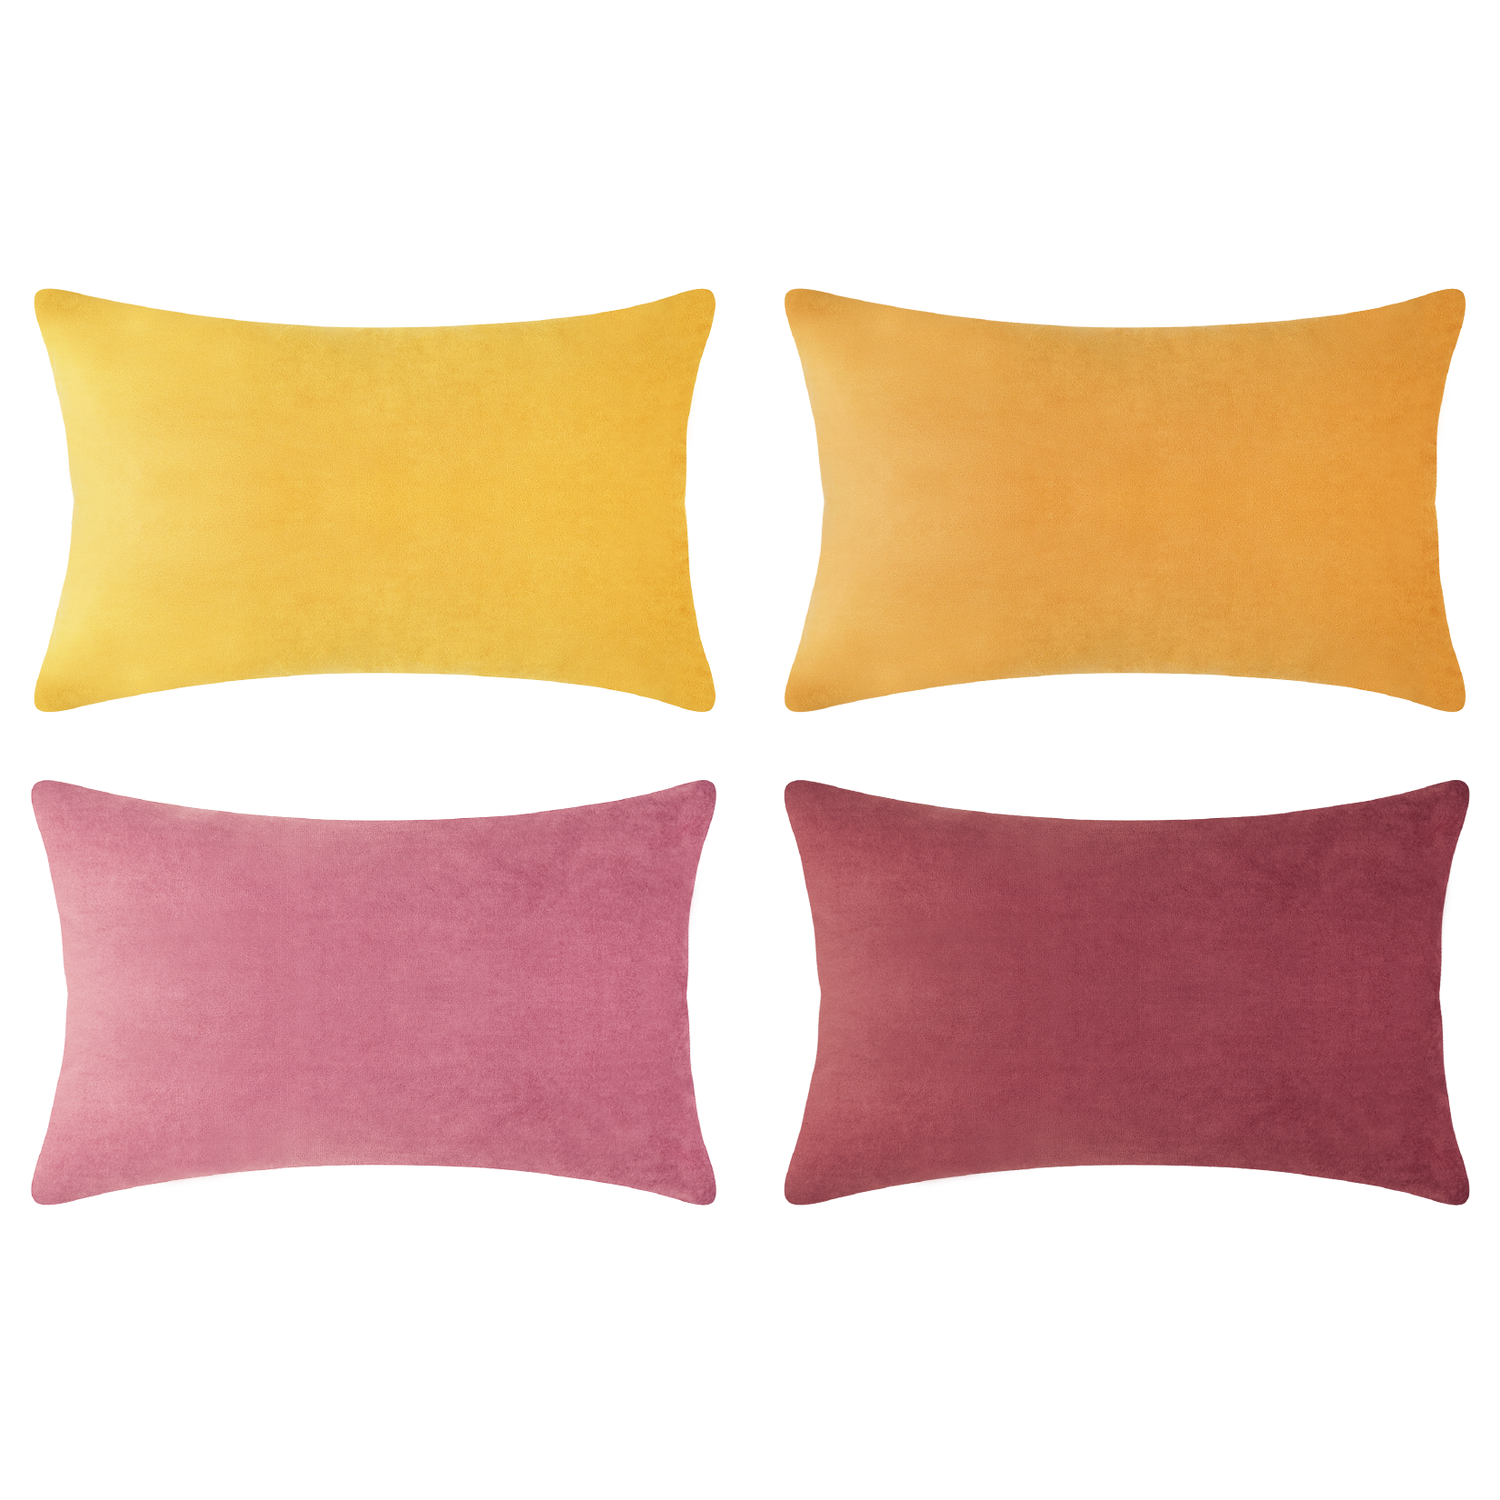 decorative throw pillow covers velvet home decor set of 4 yellow pink ochre